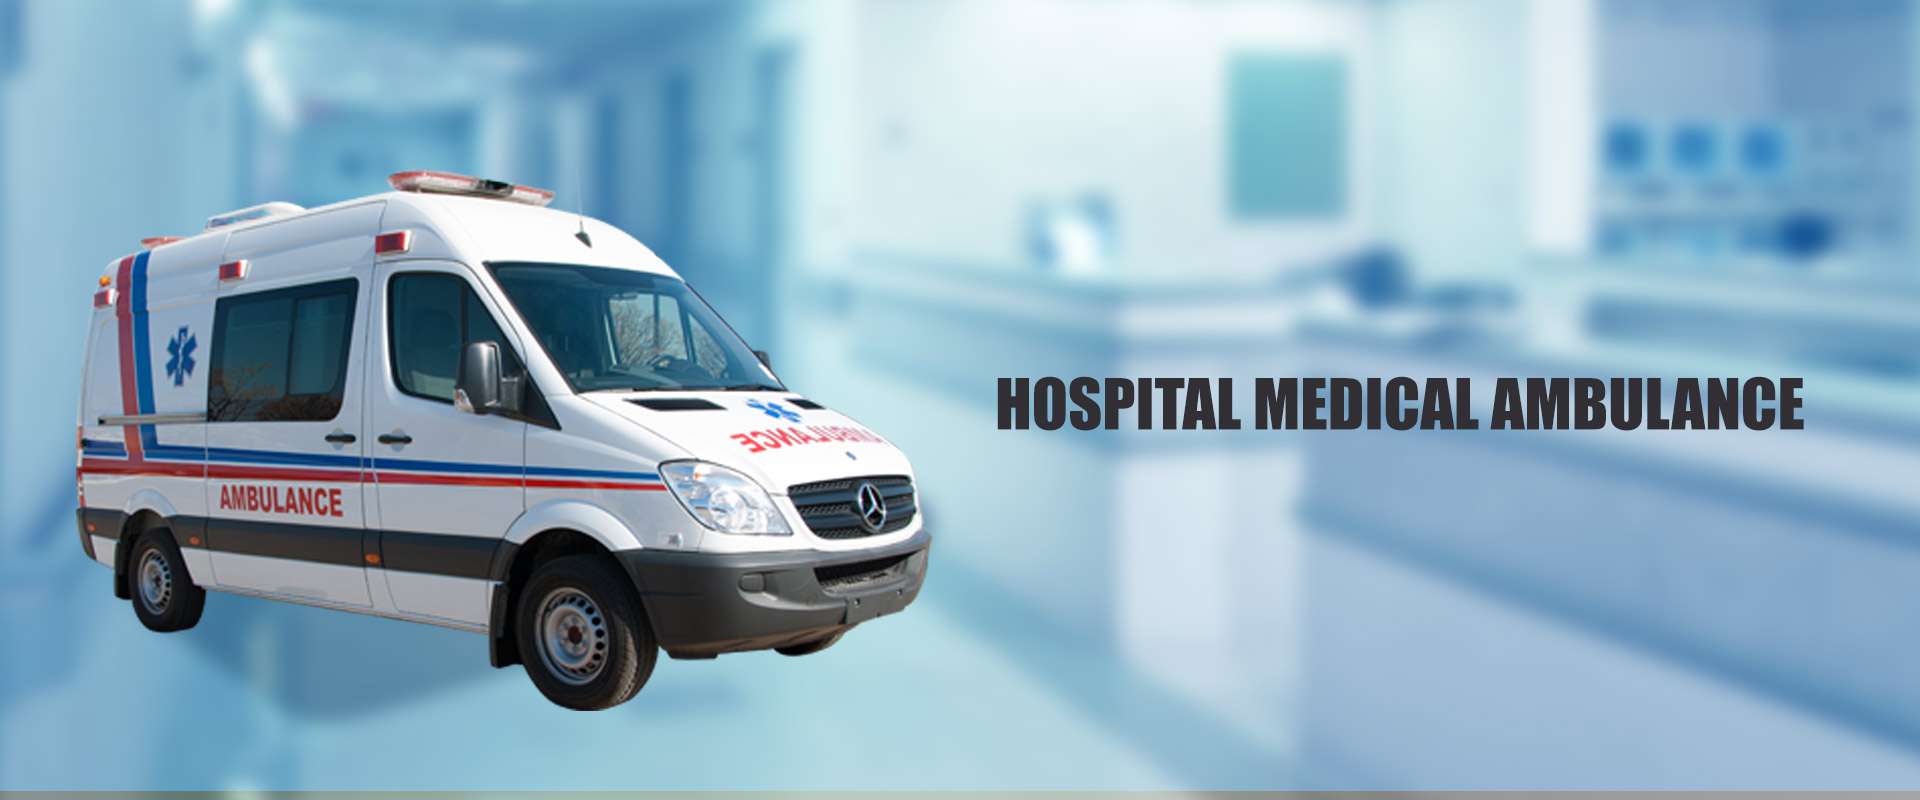 Hospital Medical Ambulance Manufacturers in India